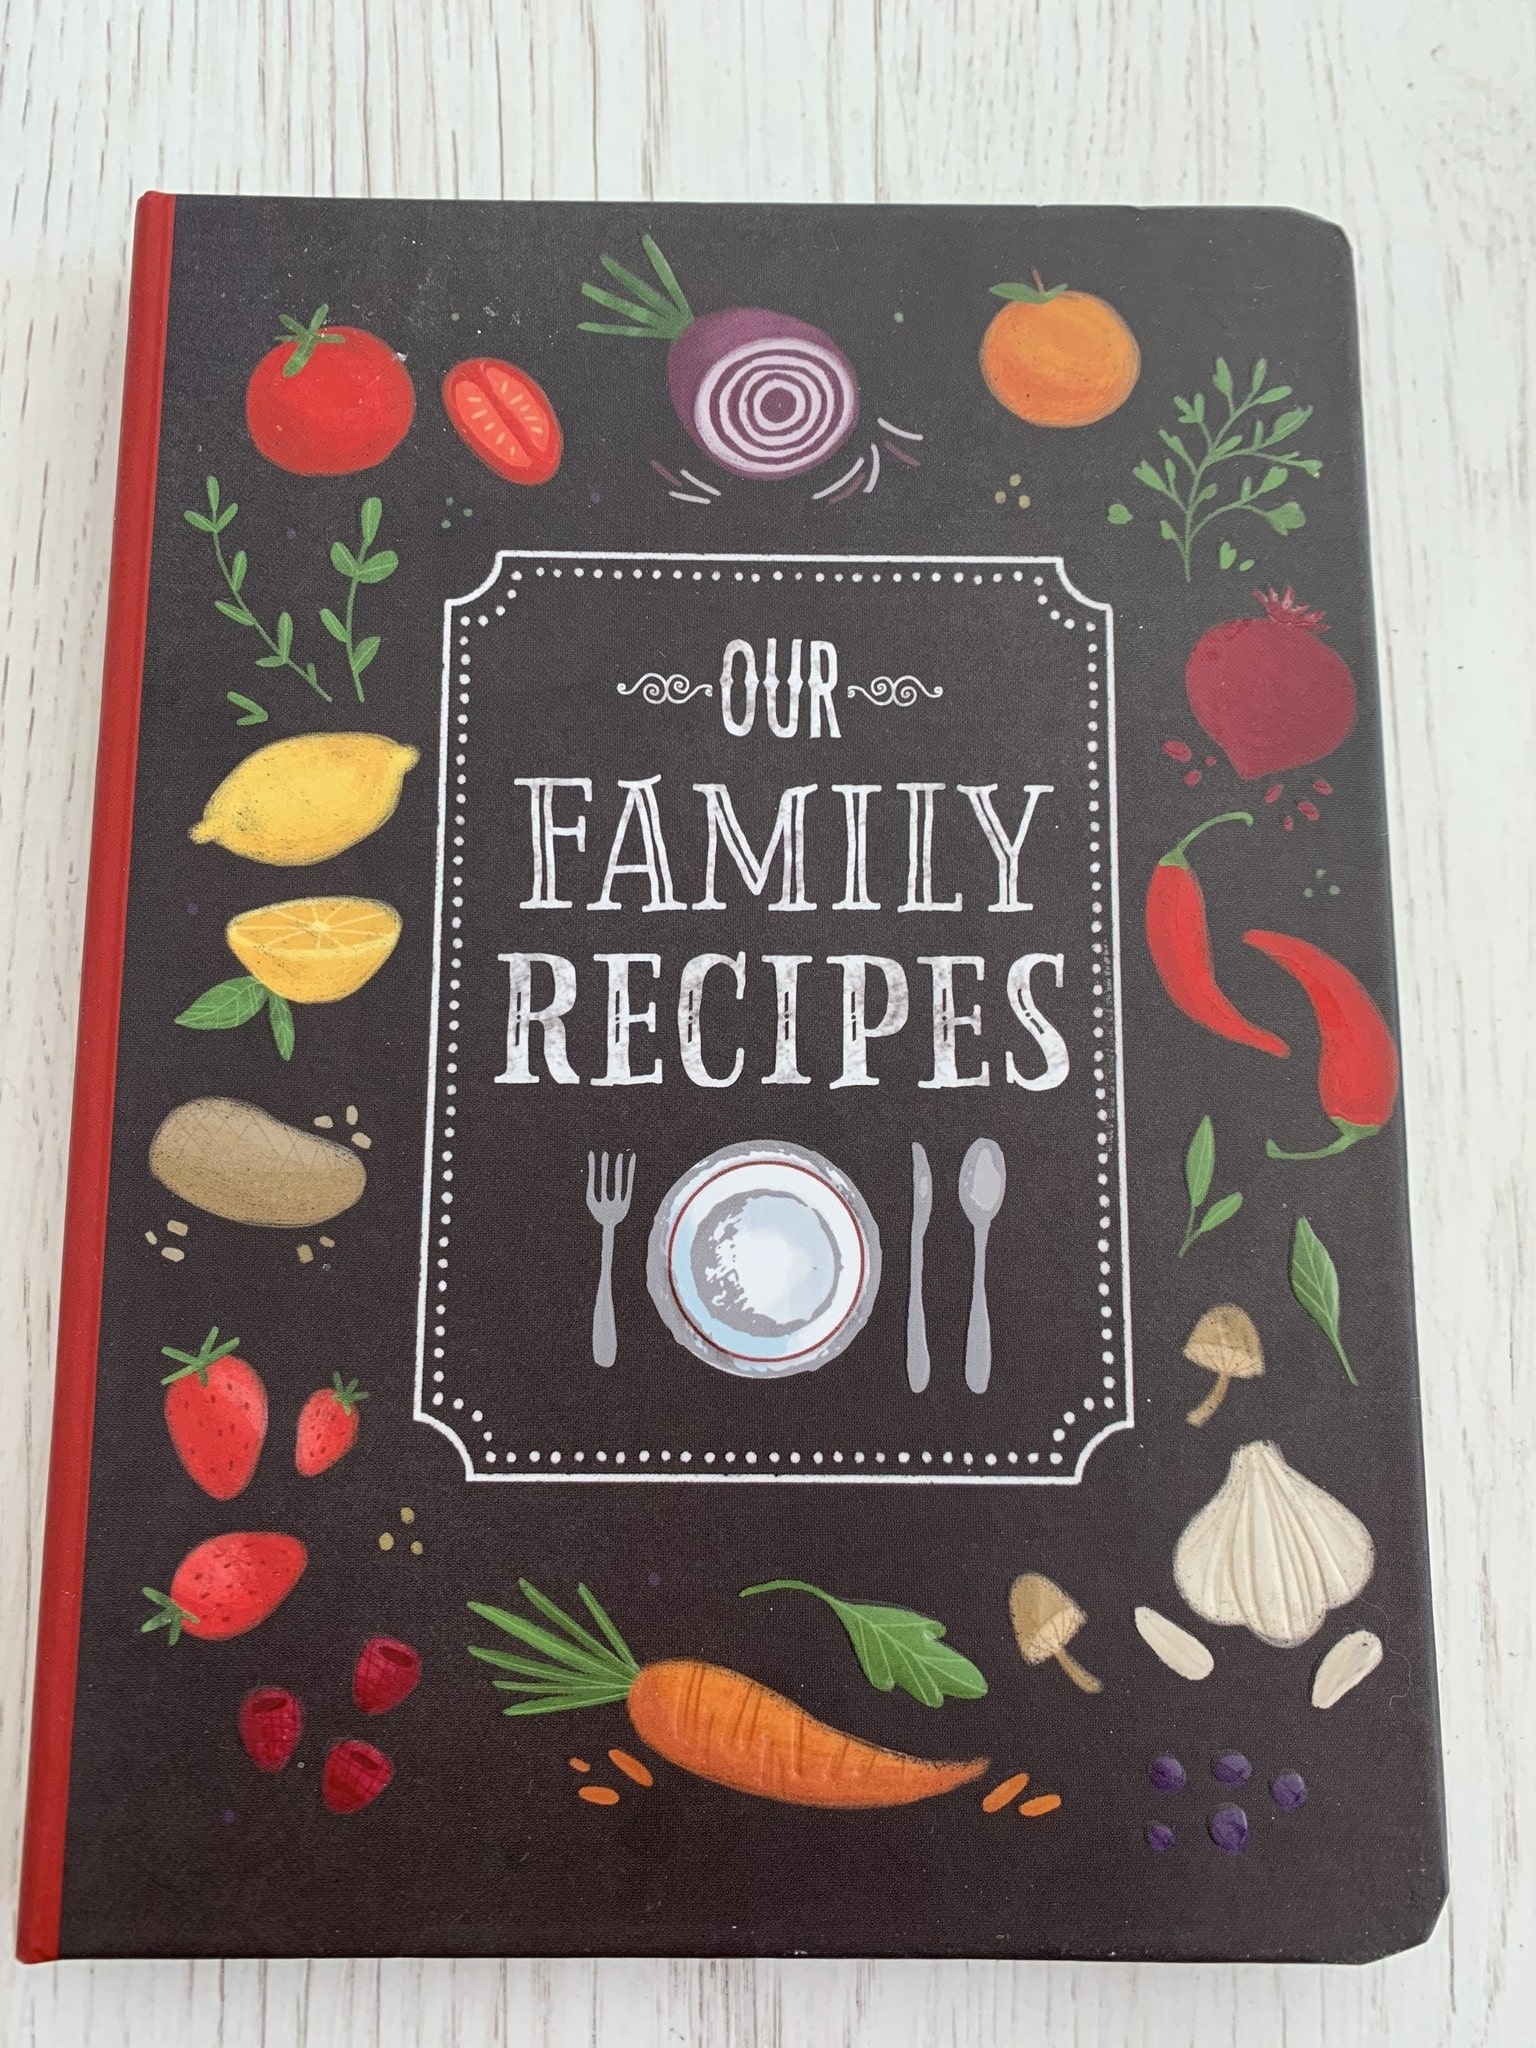 Our Family Recipe Book | Cardsmart in Buffalo, NY